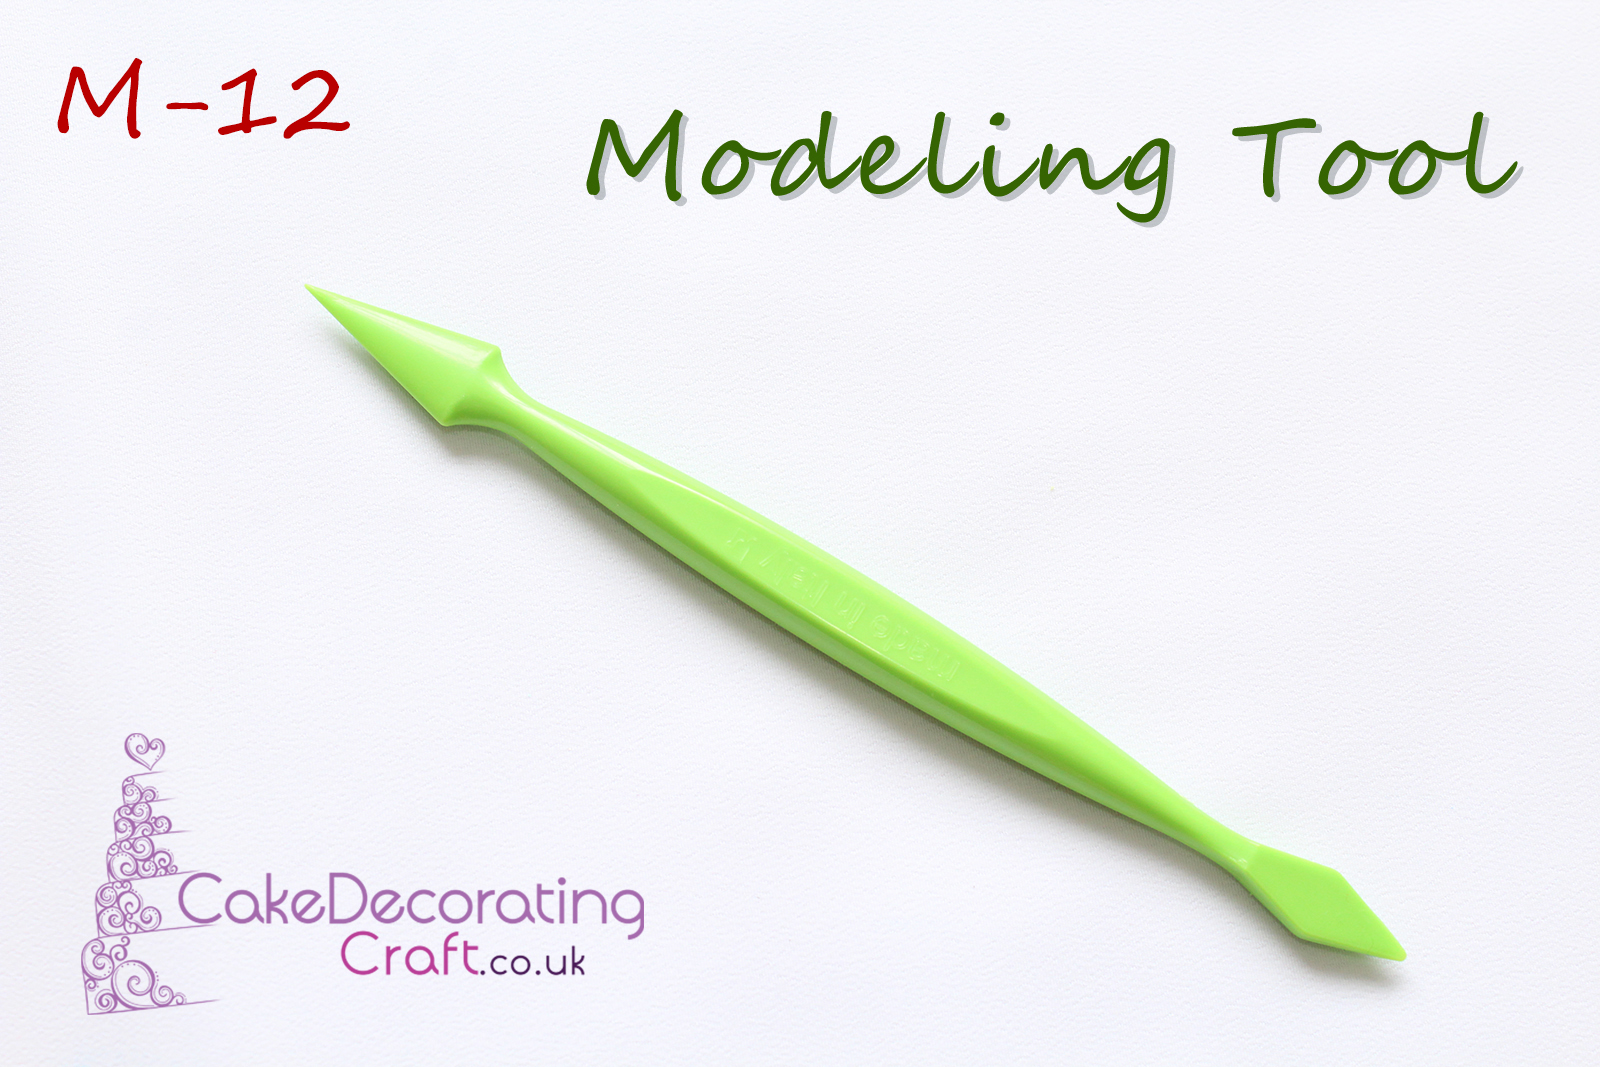 Cake Decorating Craft Modelling Tools | Double Ended | Gum Paste Flower Paste Modelling Sugar Paste Craft | M-12